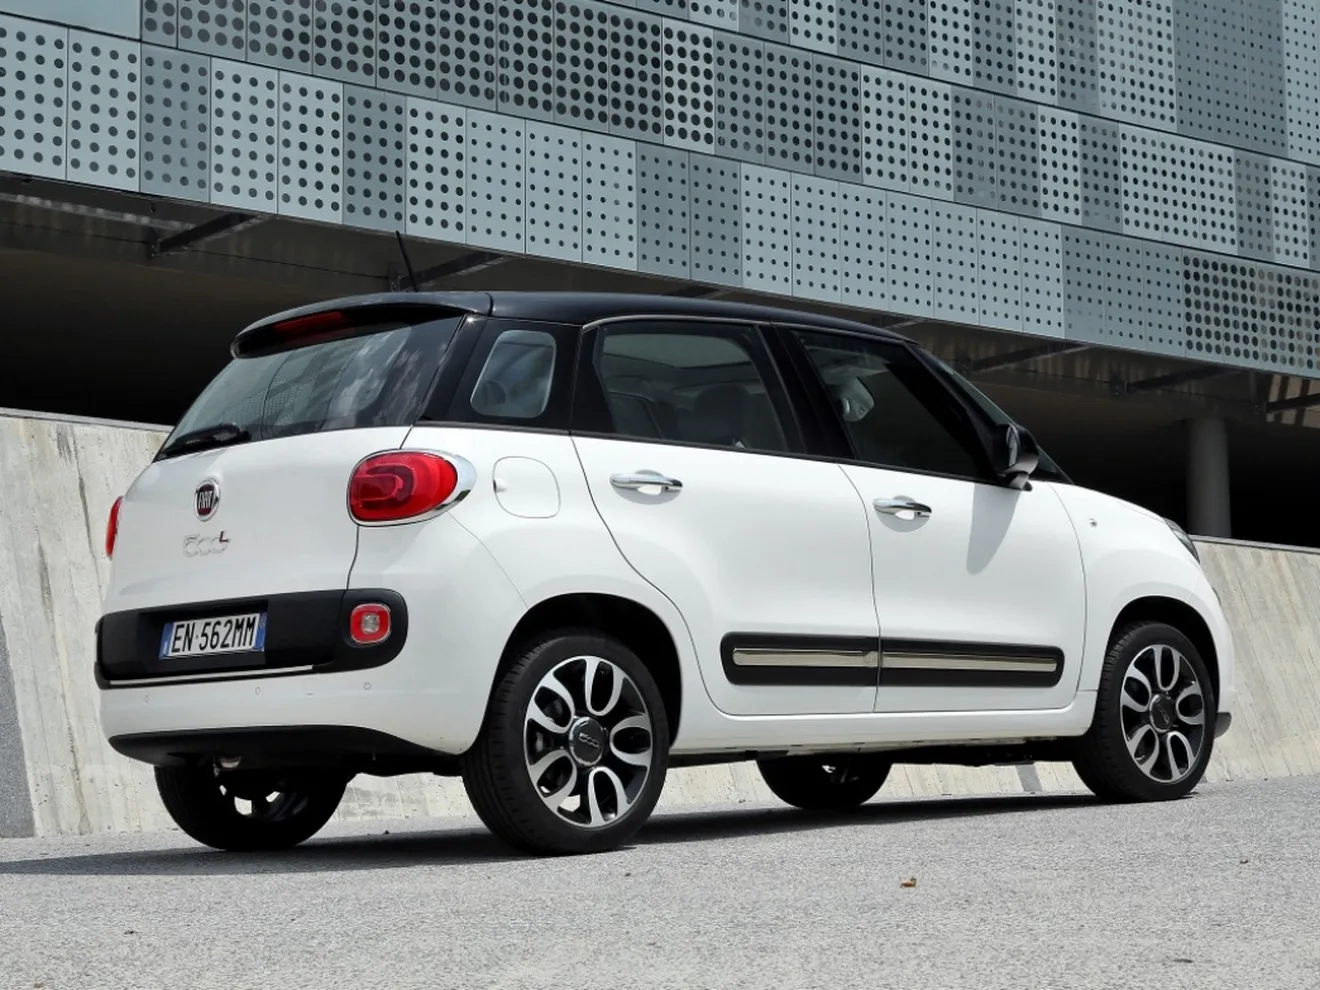 Italia - Abril 2014: El Fiat 500L se mantiene firme